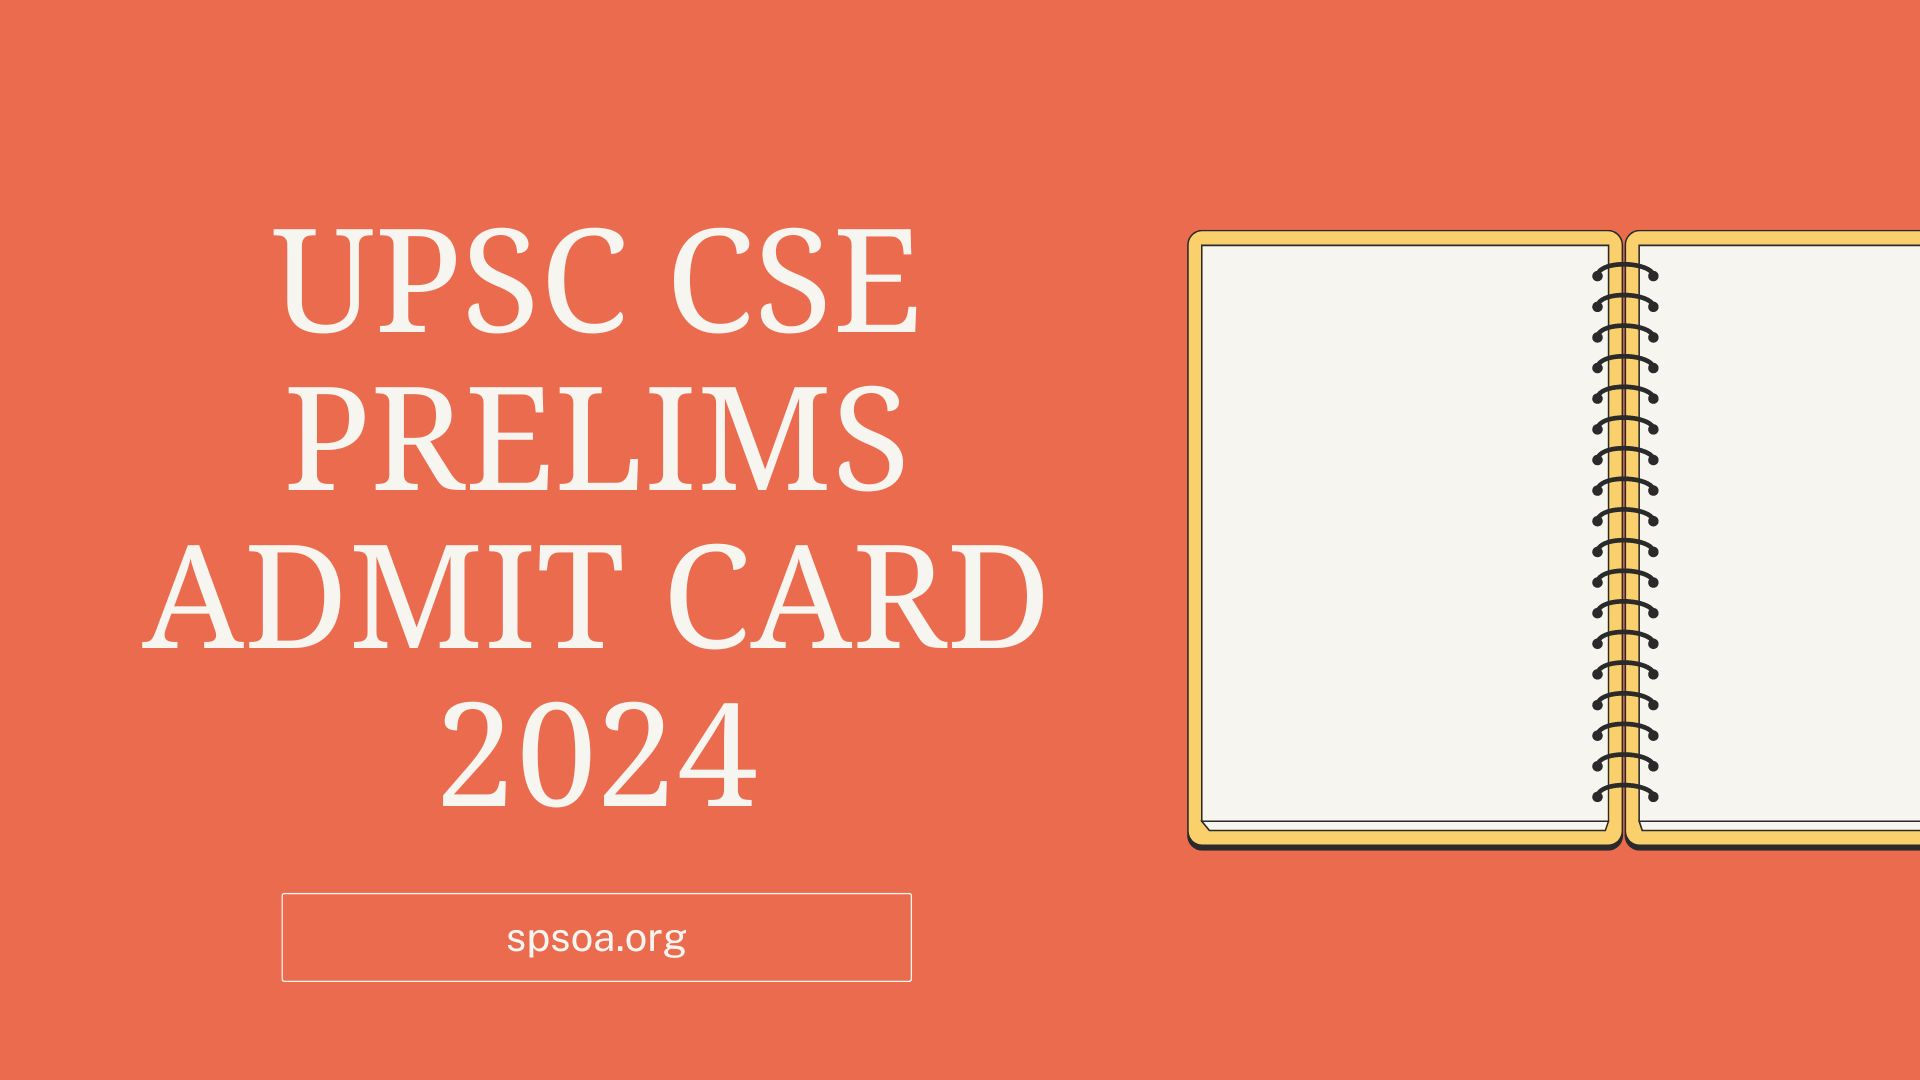 UPSC CSE Prelims Admit Card 2024